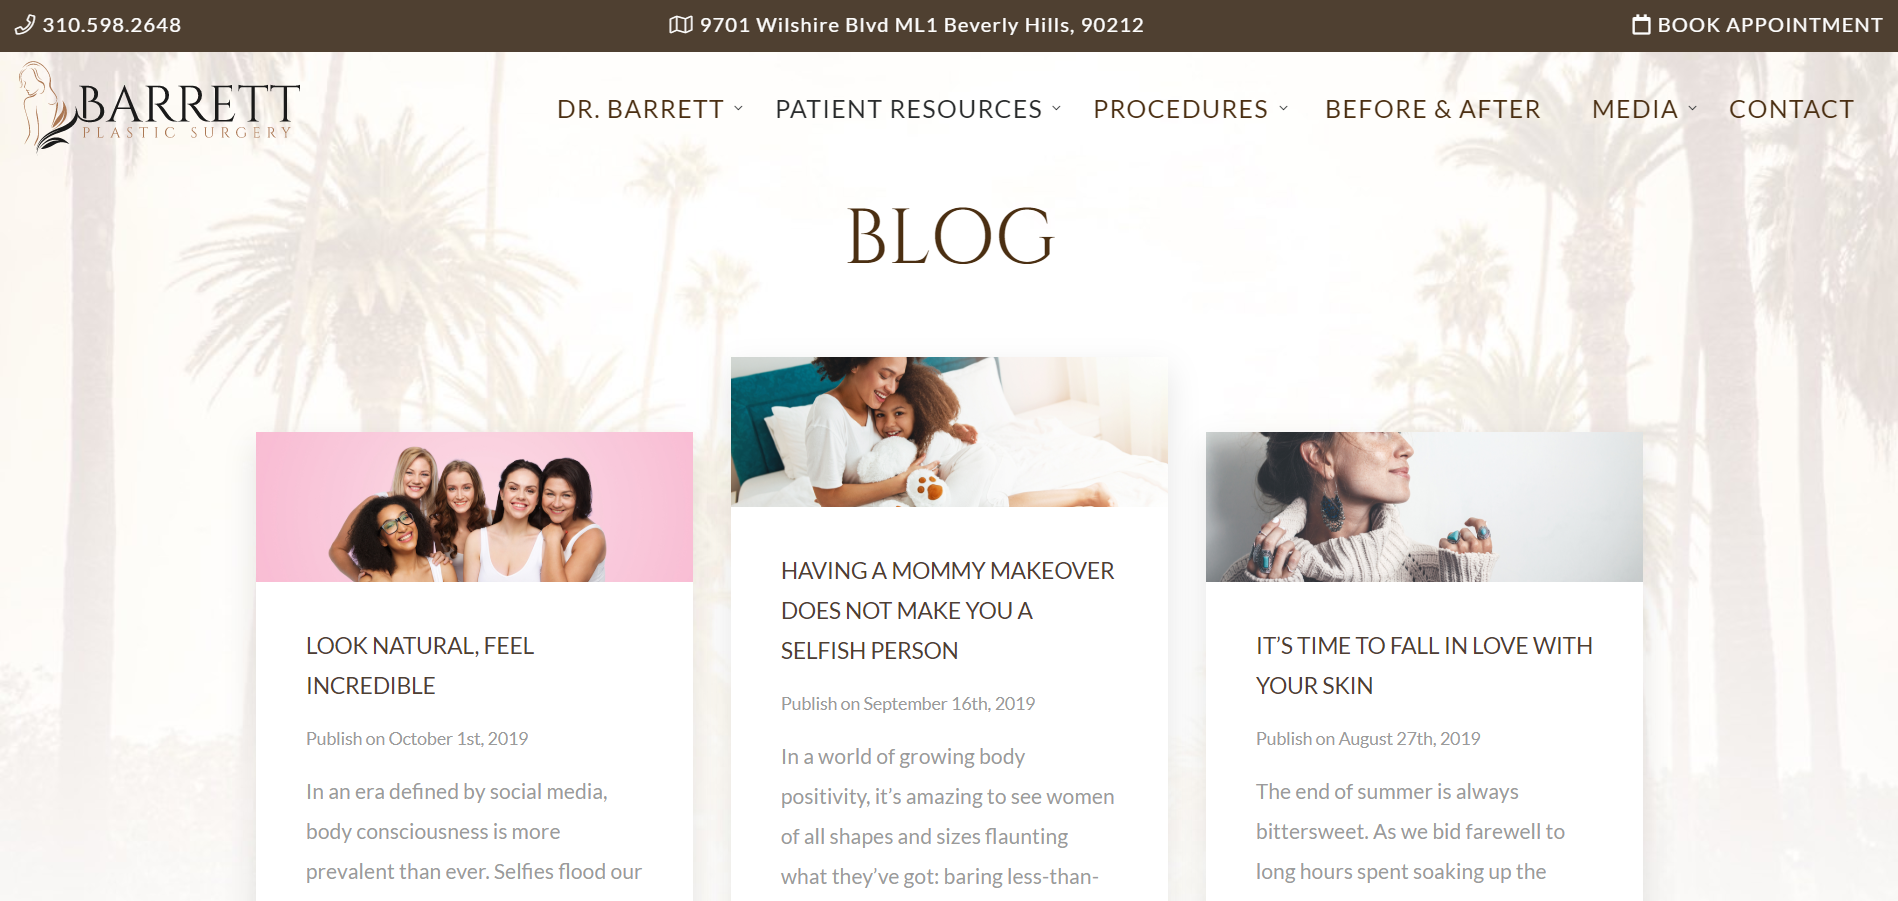 The blog on the Barrett Plastic Surgery website